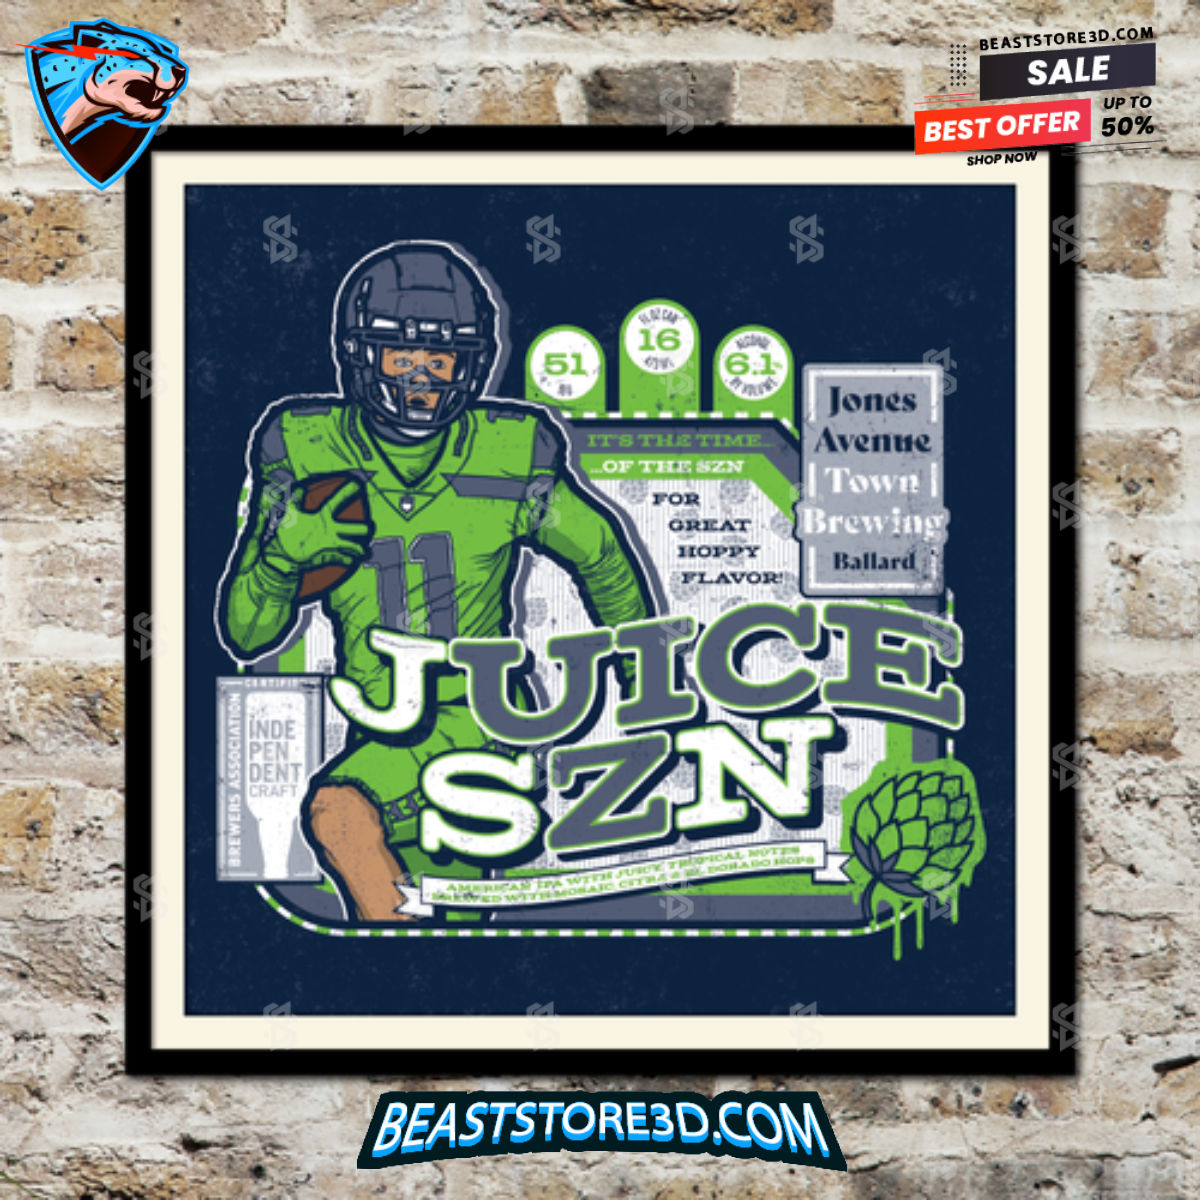 Jaxon Smith Njigba Seattle Seahawks Fake Craft Beer Label Print 1697116481803 uiJEw.jpg